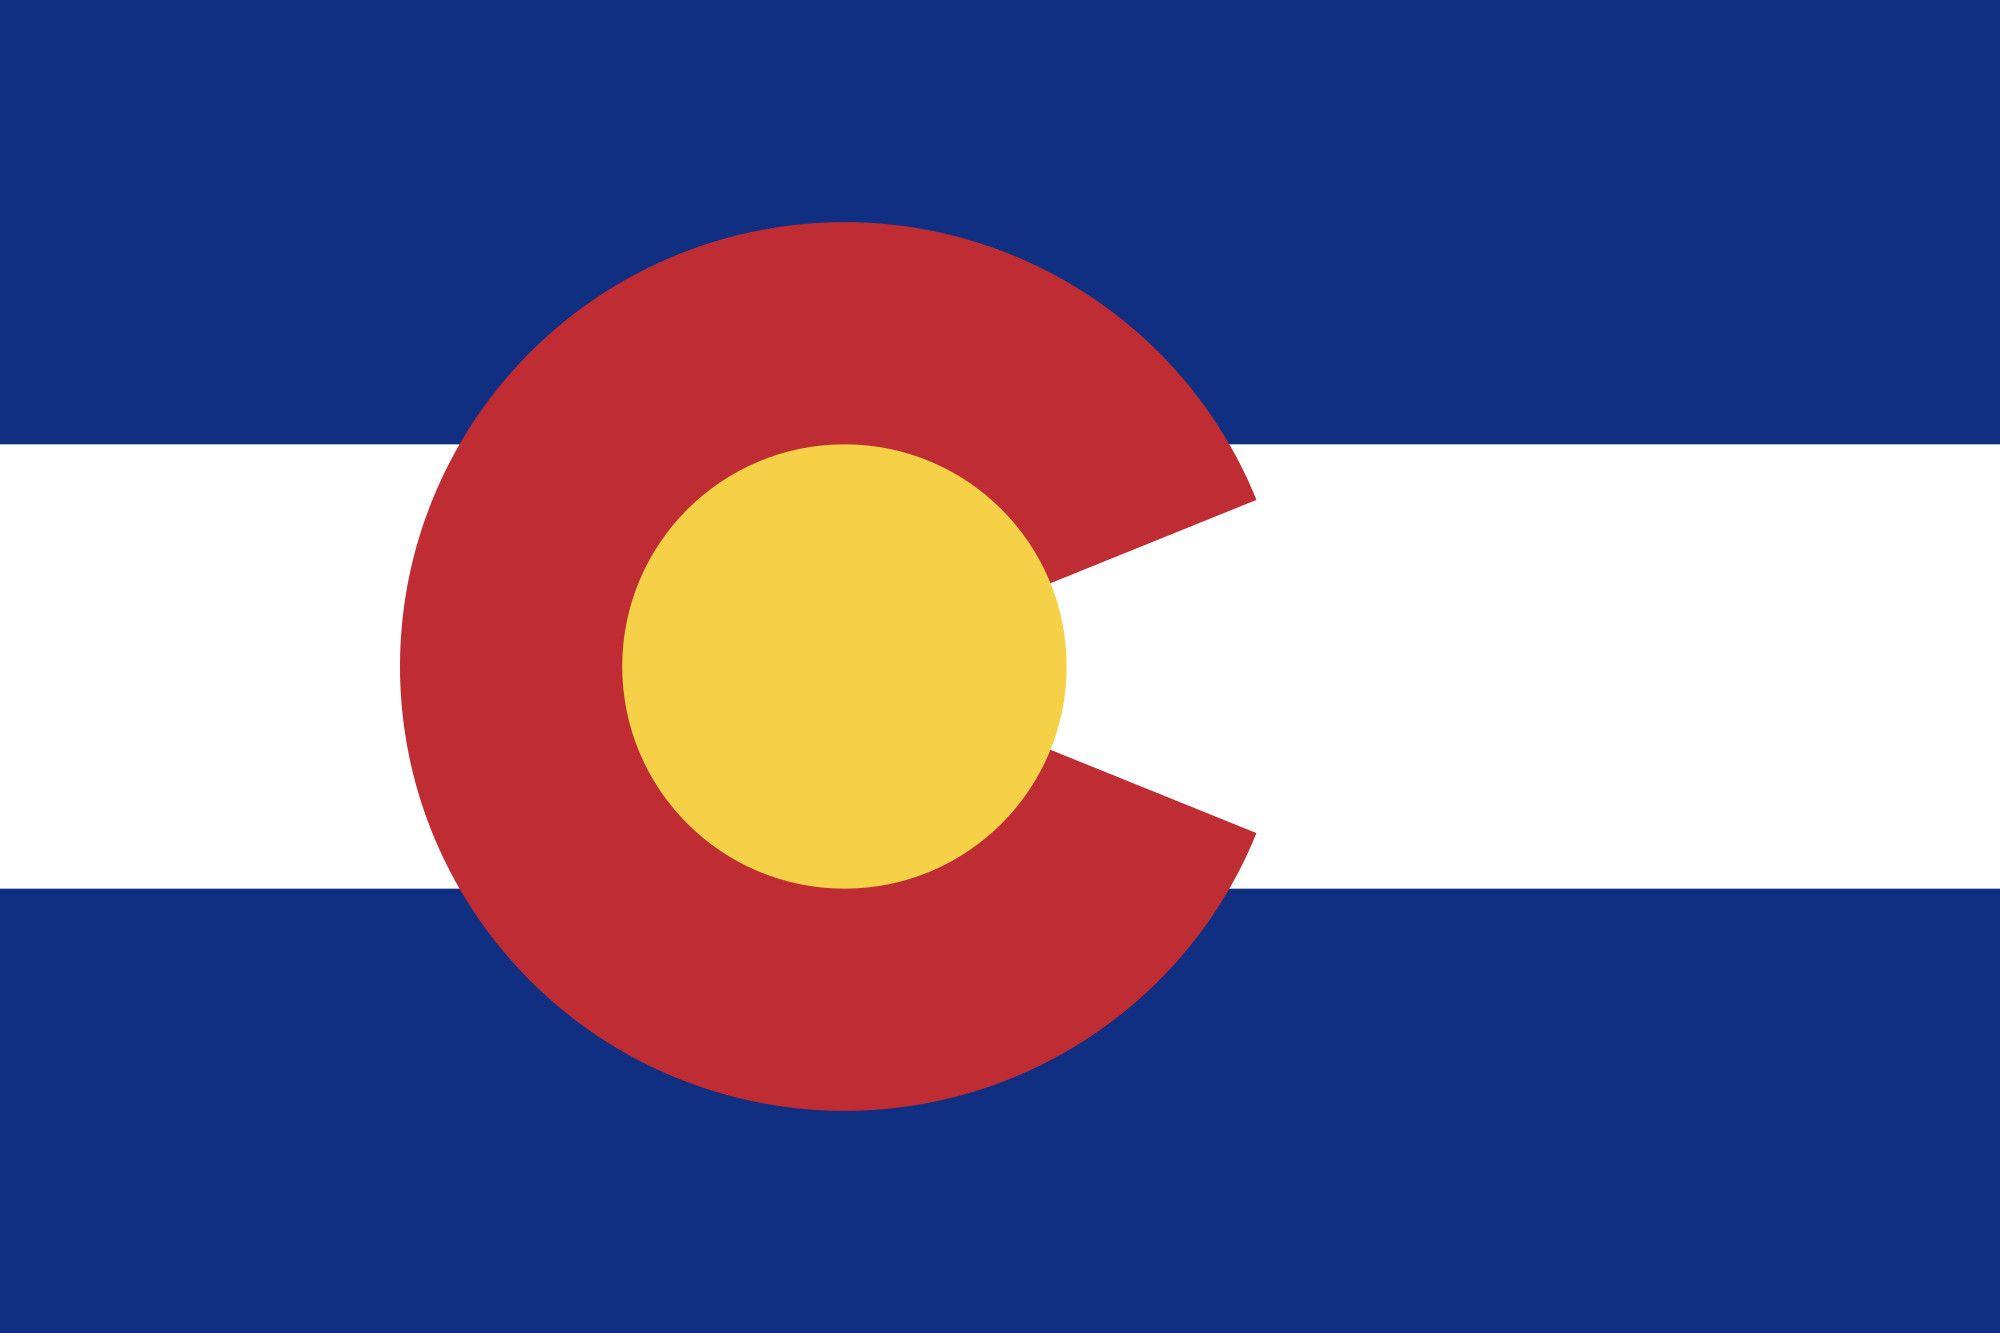 9348 Colorado Flag Images Stock Photos  Vectors  Shutterstock